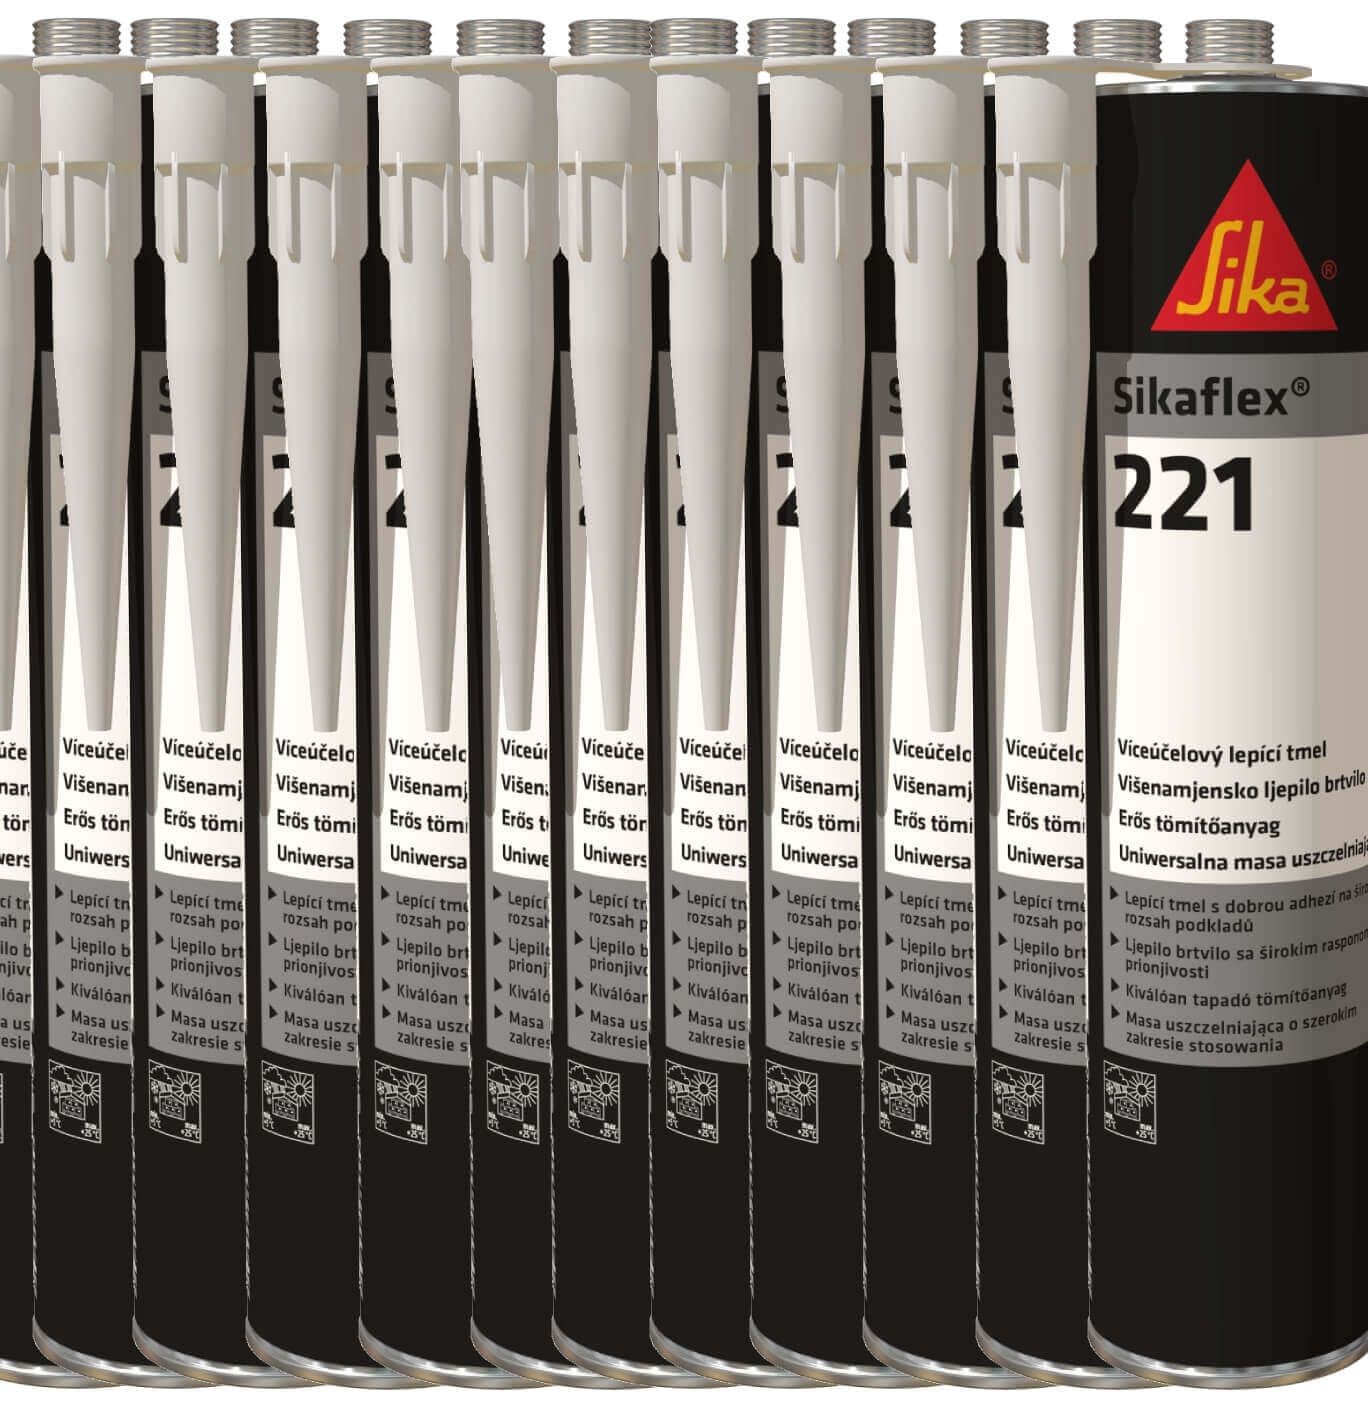 12 x Sikaflex 221 White Multi Purpose Adhesive Sealant Bundle Image